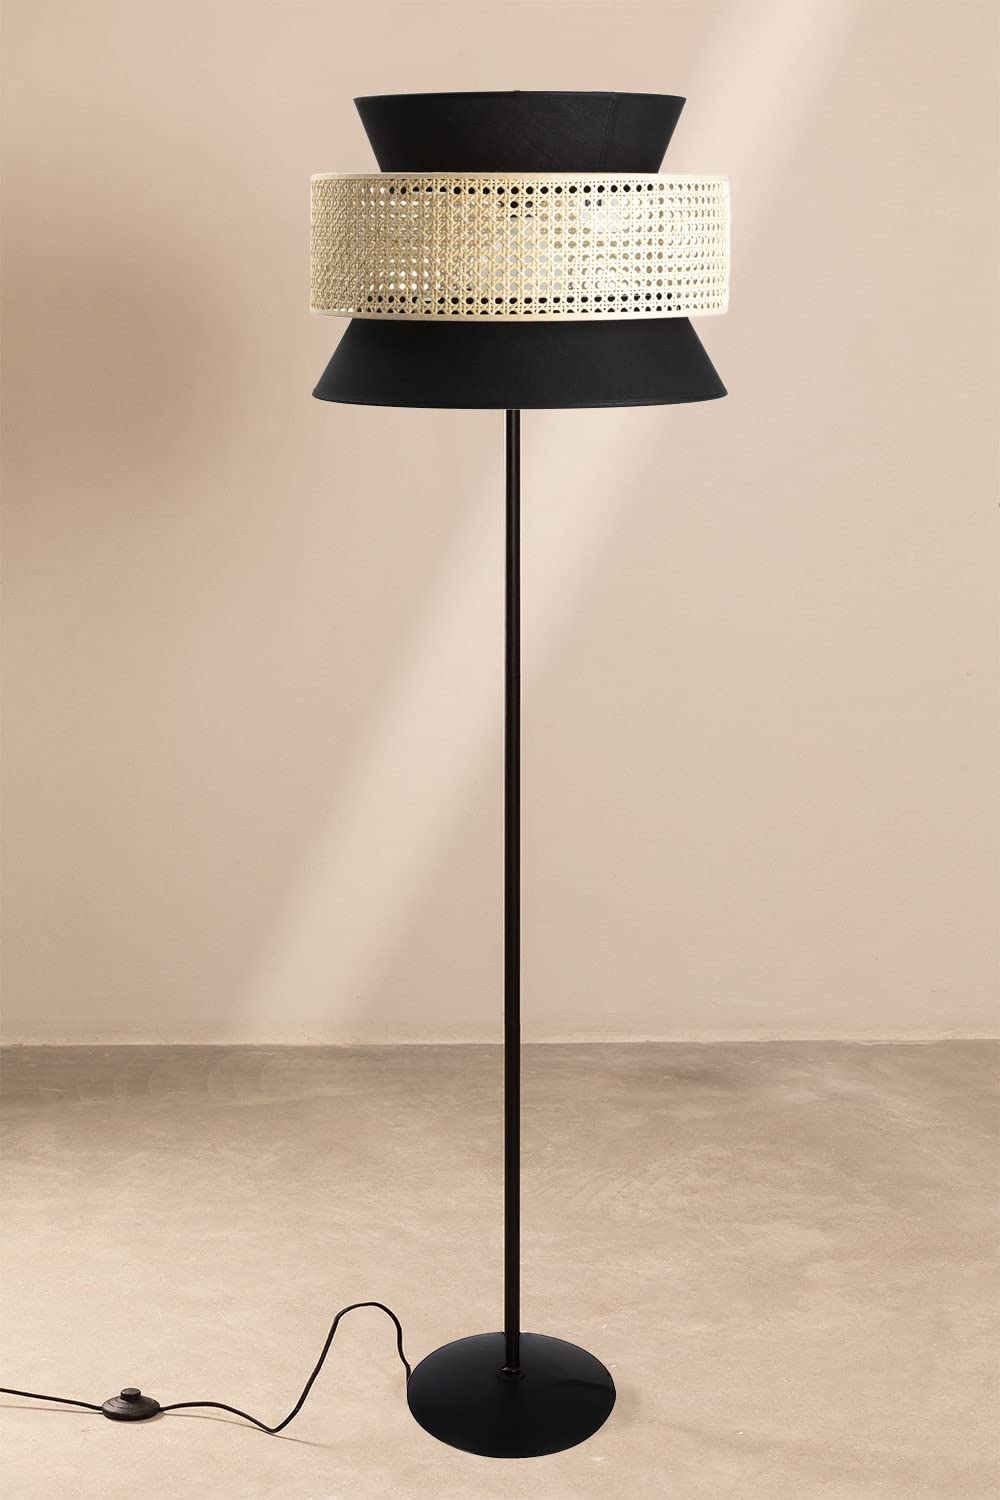 AKWAY Rattan Cane Webbing Floor Lamp Bamboo Floor Lamp Cane Floor Lamp Standing Lamp Wooden Standing lamp for Living Room Bedroom (14" D X 11") (Black Stand)(Cone Shaped) - Akway